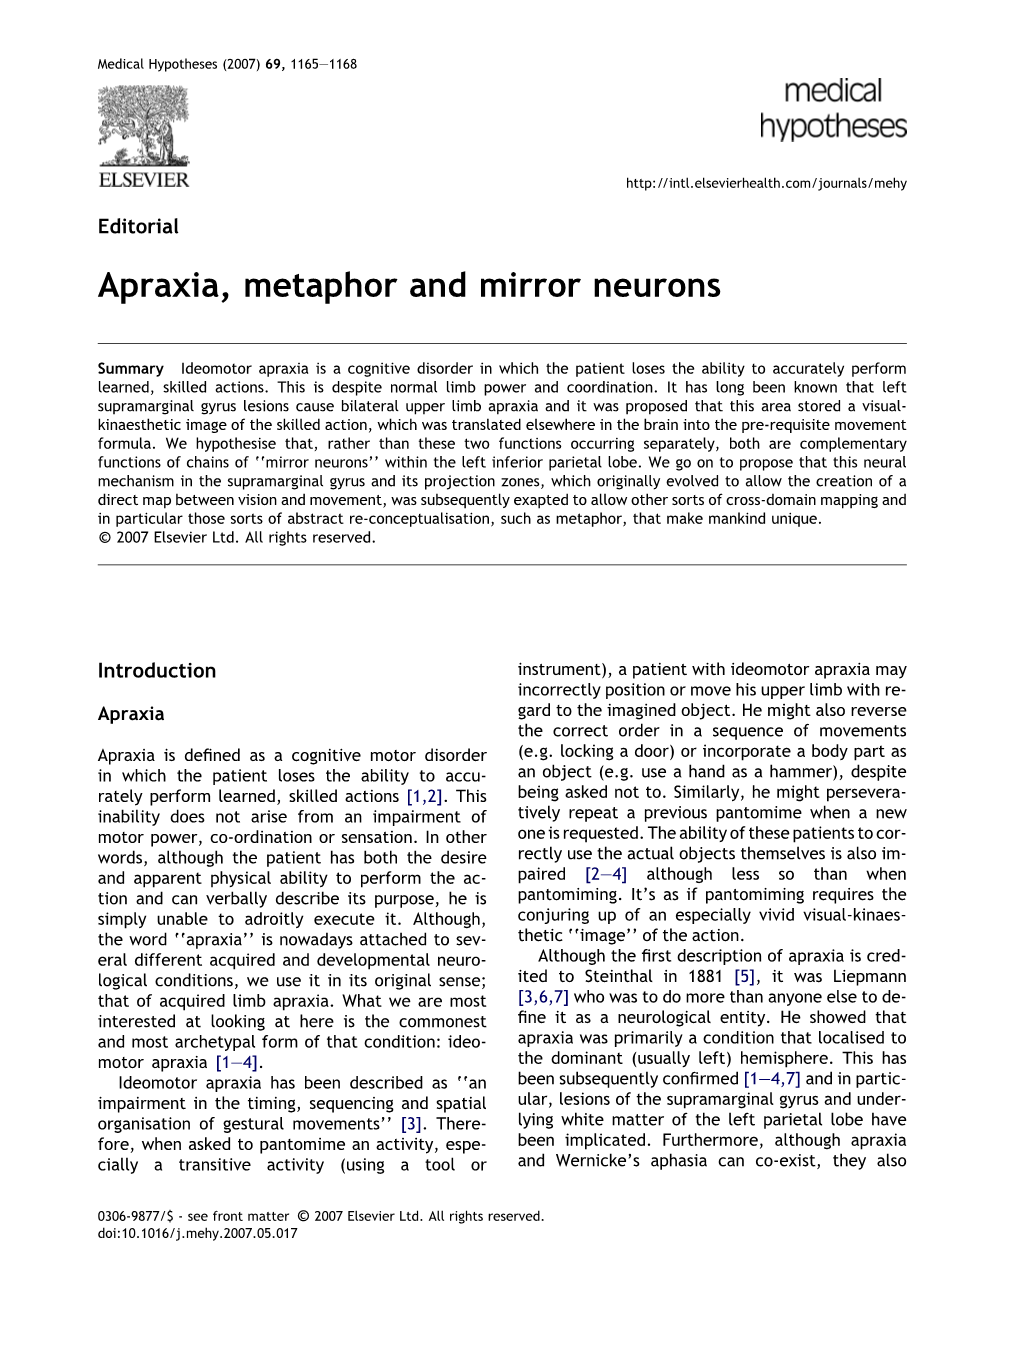 Apraxia, Metaphor and Mirror Neurons